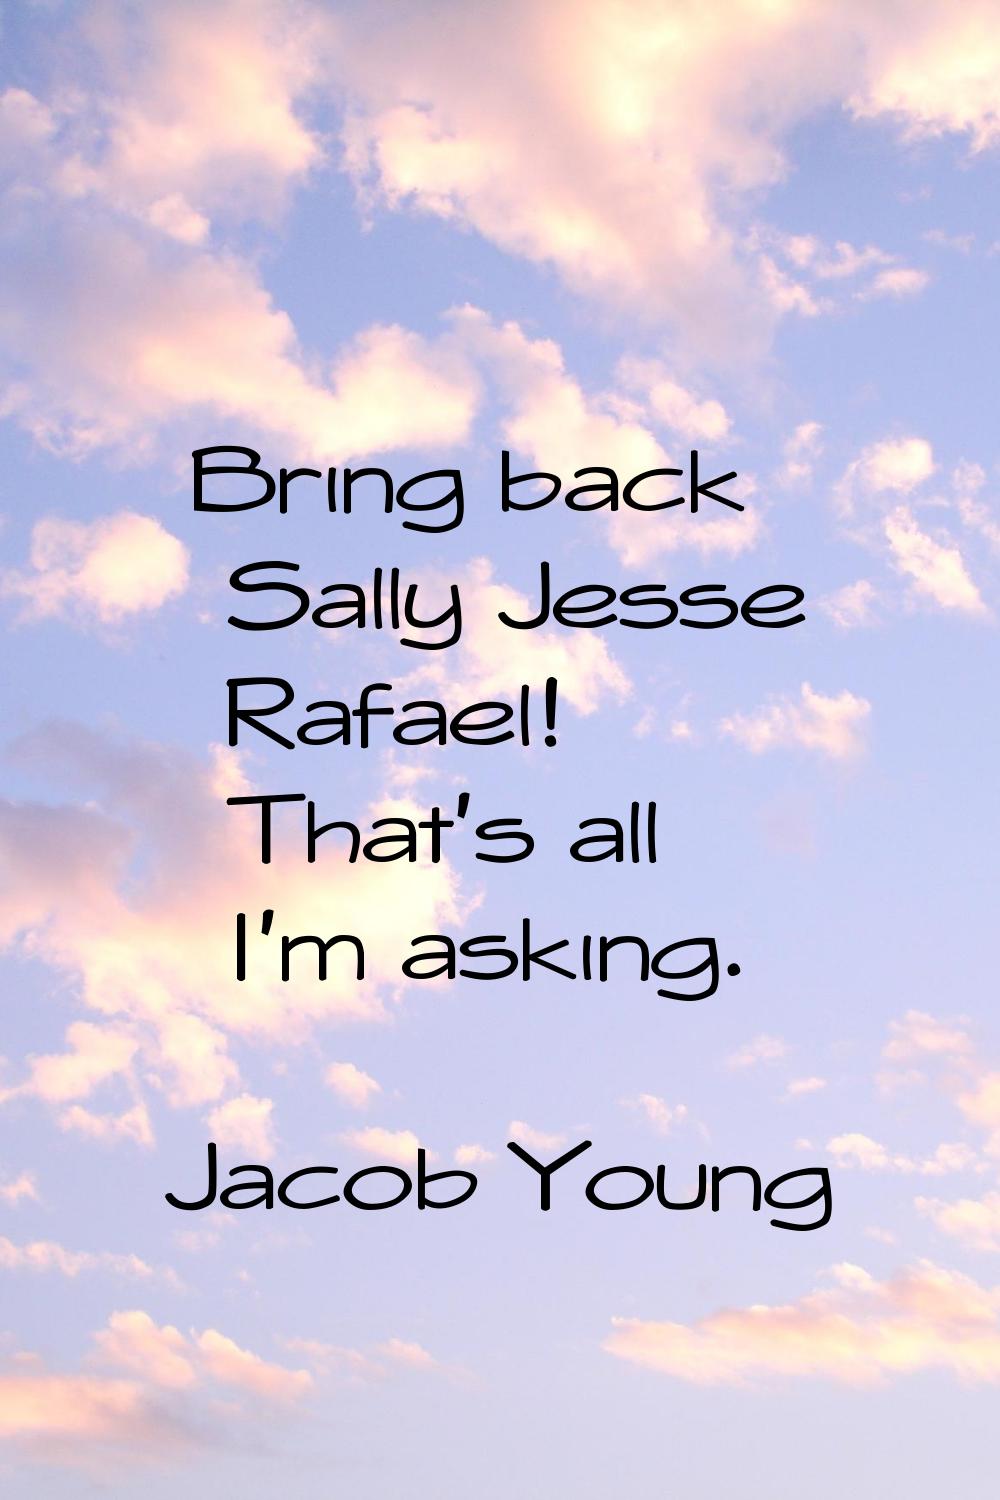 Bring back Sally Jesse Rafael! That's all I'm asking.